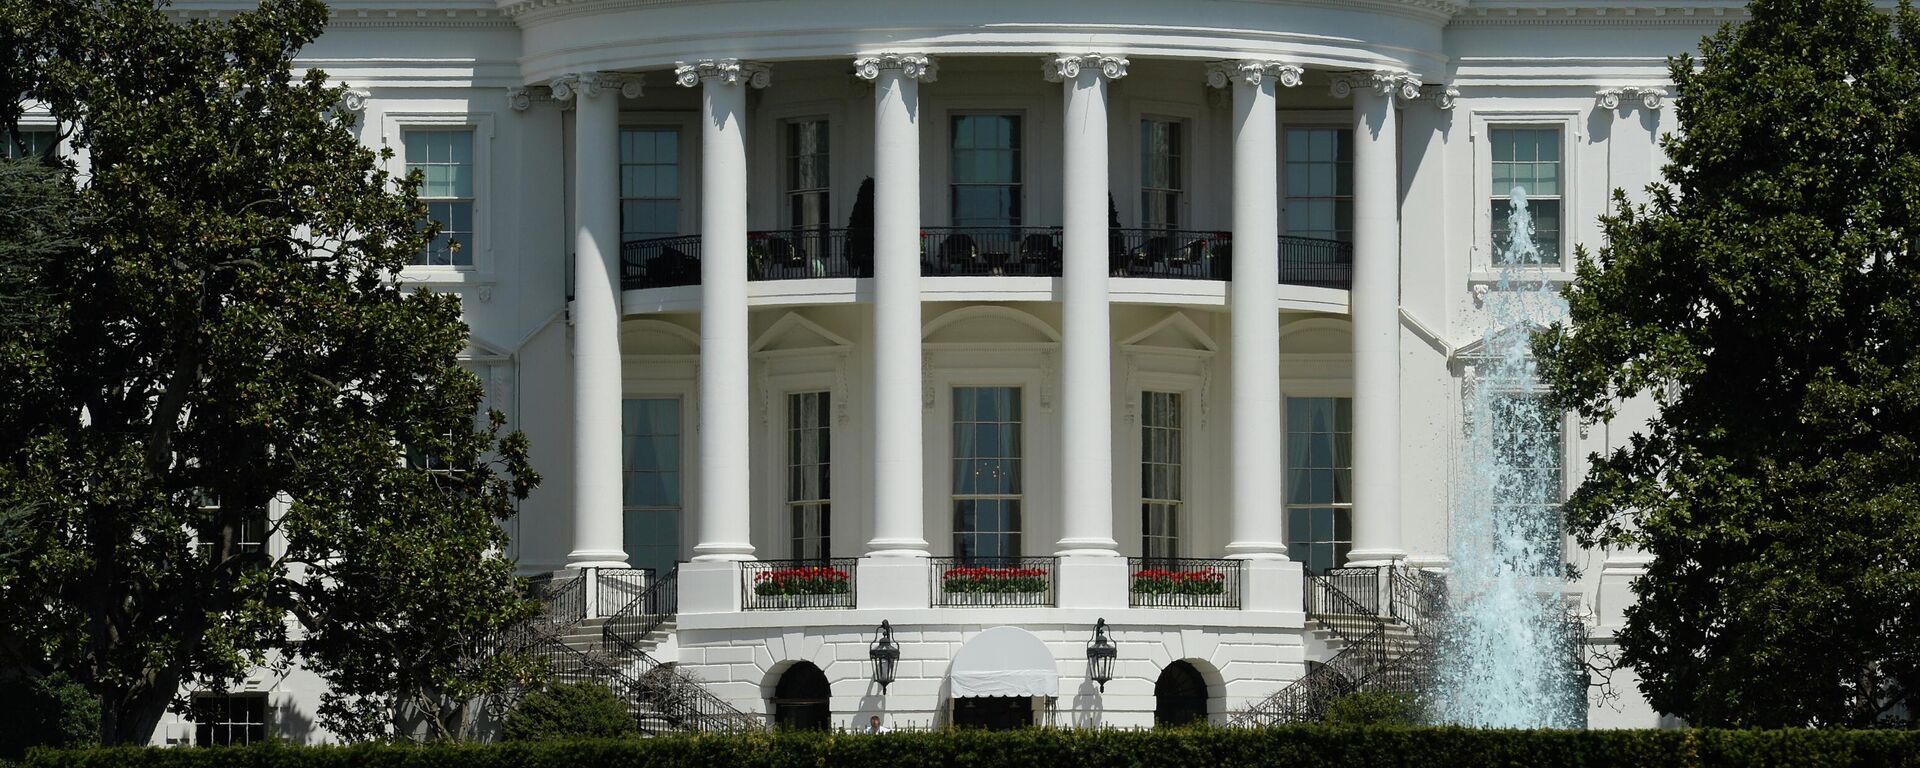 Official residence of the U.S. President, the White House in Washington D.C. - Sputnik International, 1920, 23.08.2022